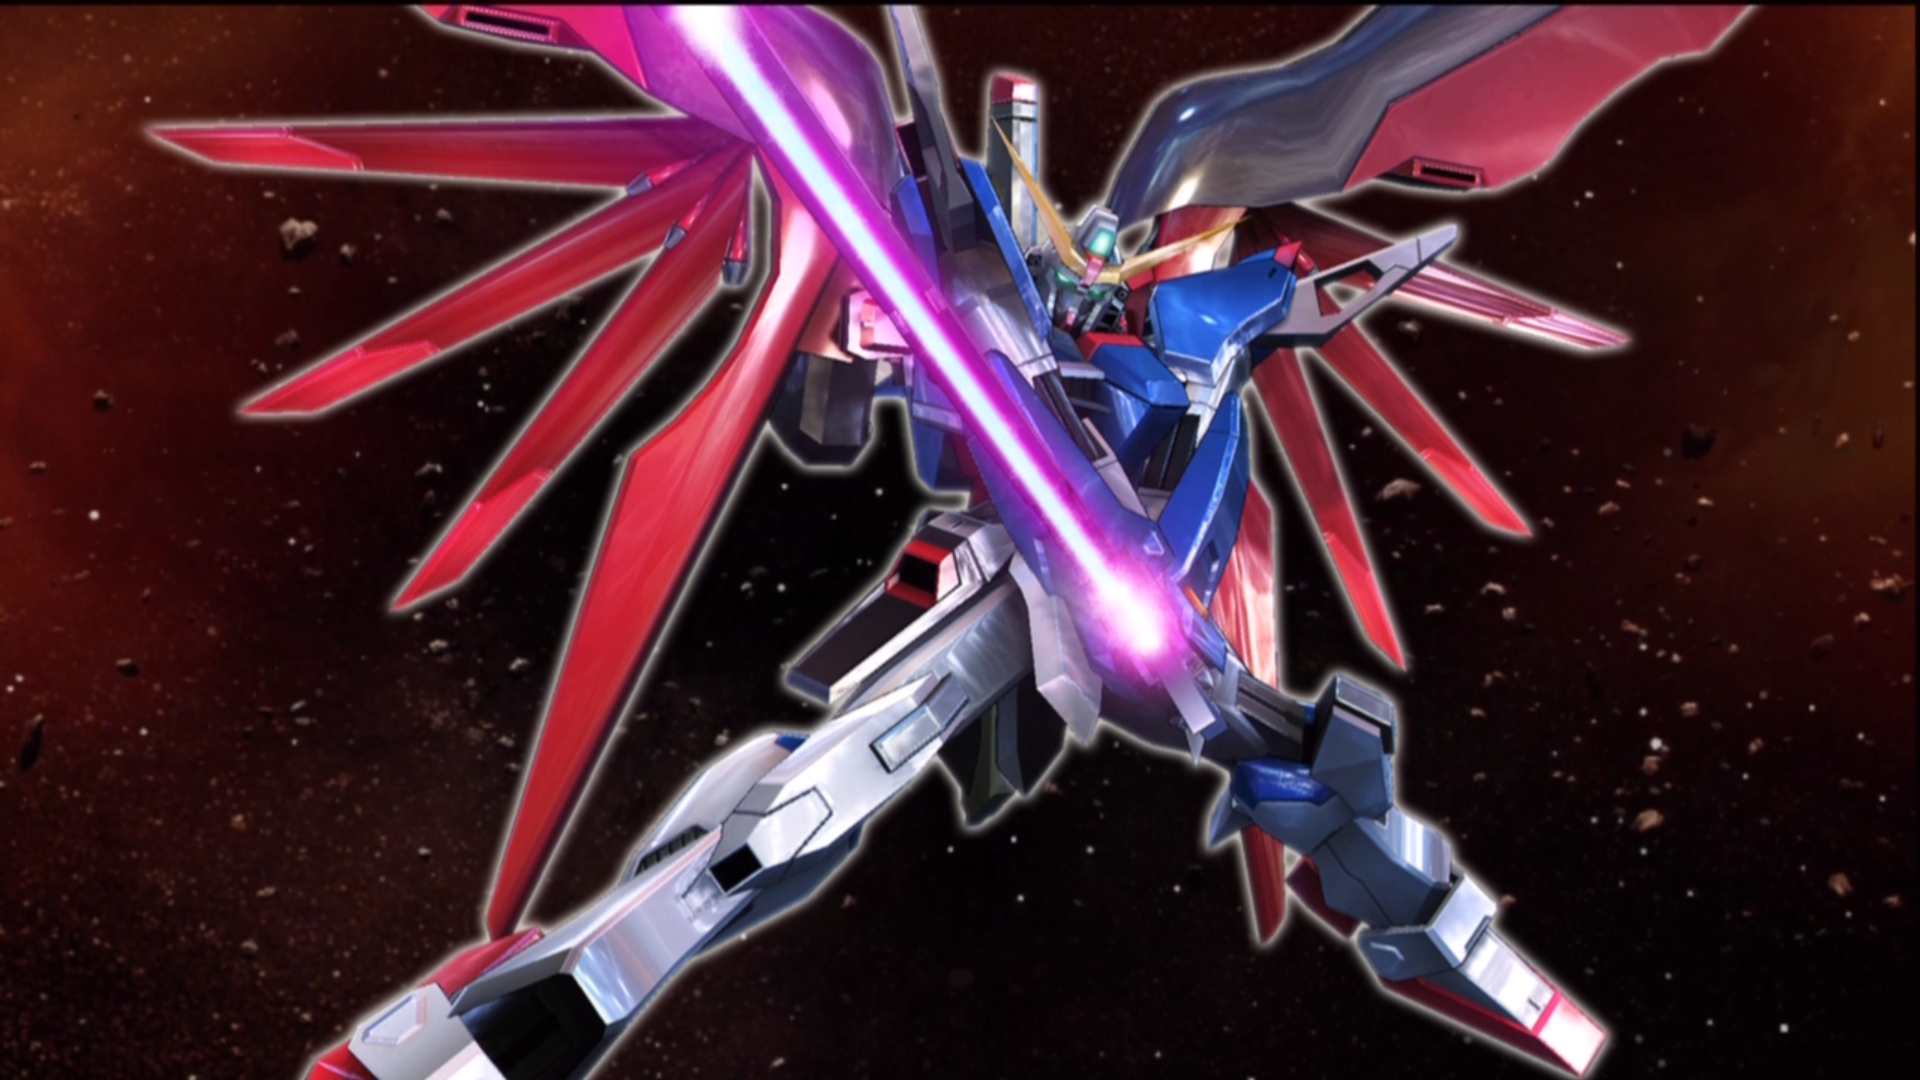 Gundam Seed Destiny Anime Background Animewp